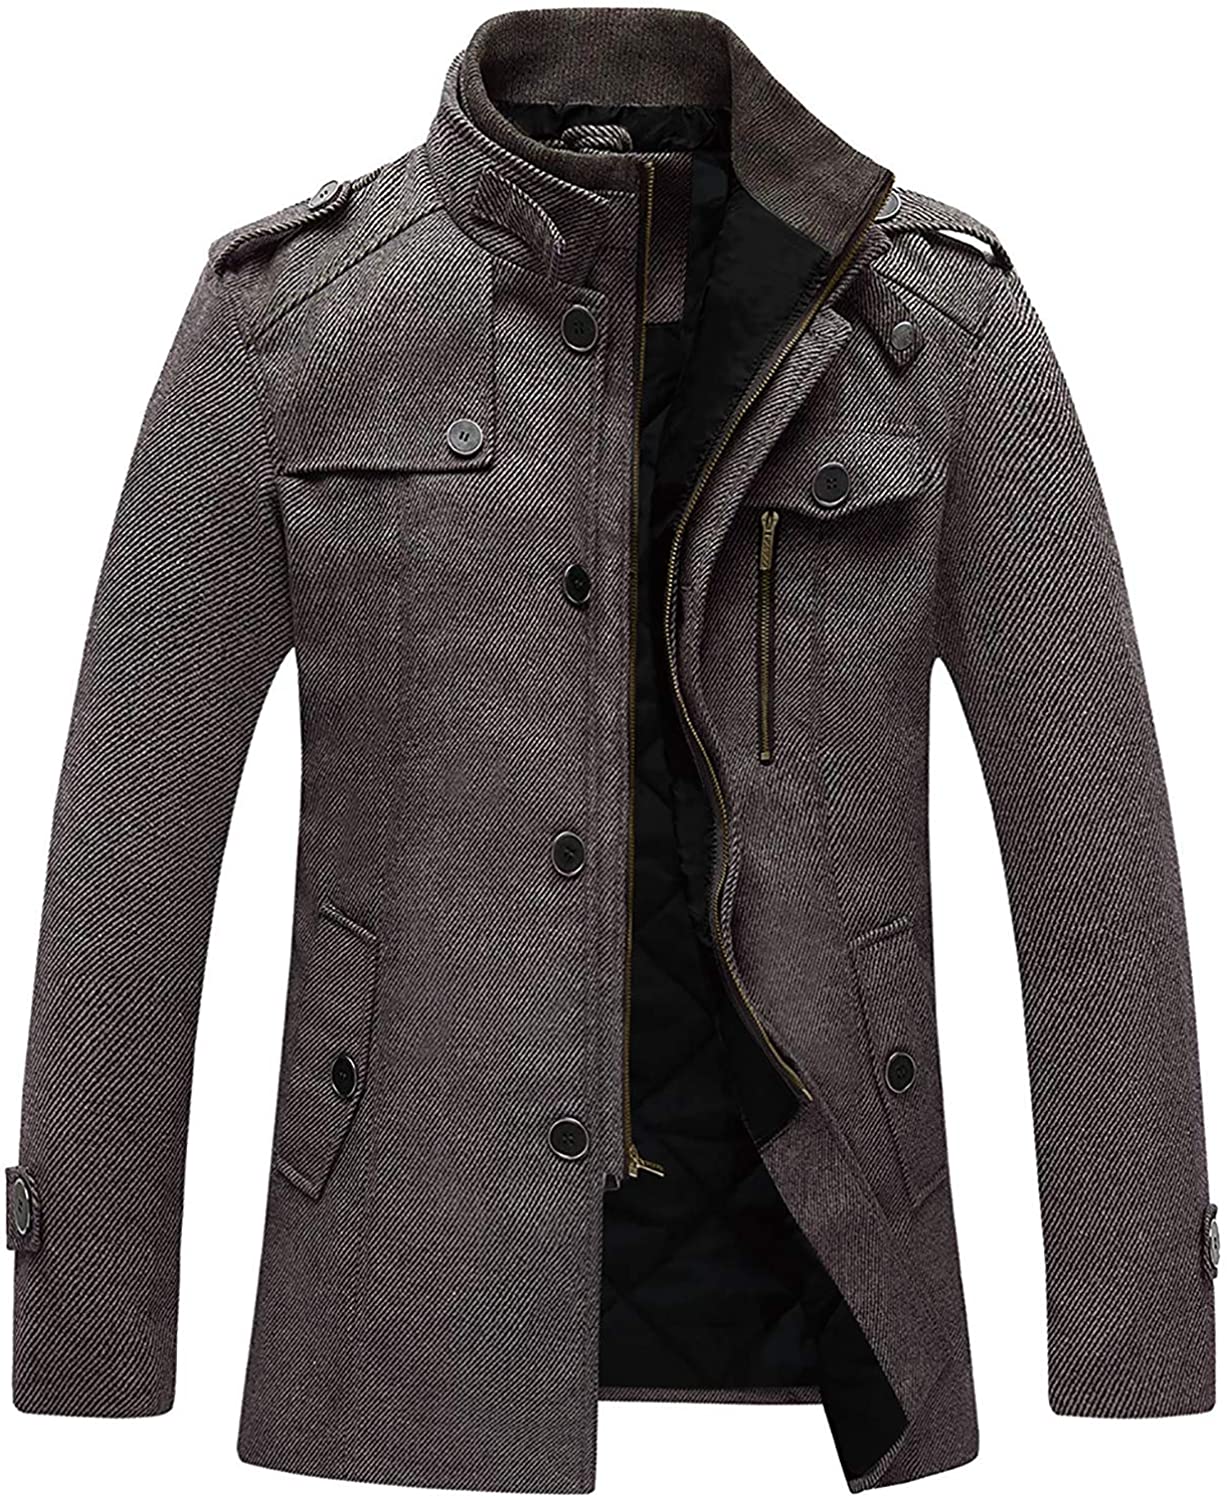 INVACHI Mens Winter Wool Coat Single Breasted Stand Collar Slim Fit Stylish Jacket Pea Coat